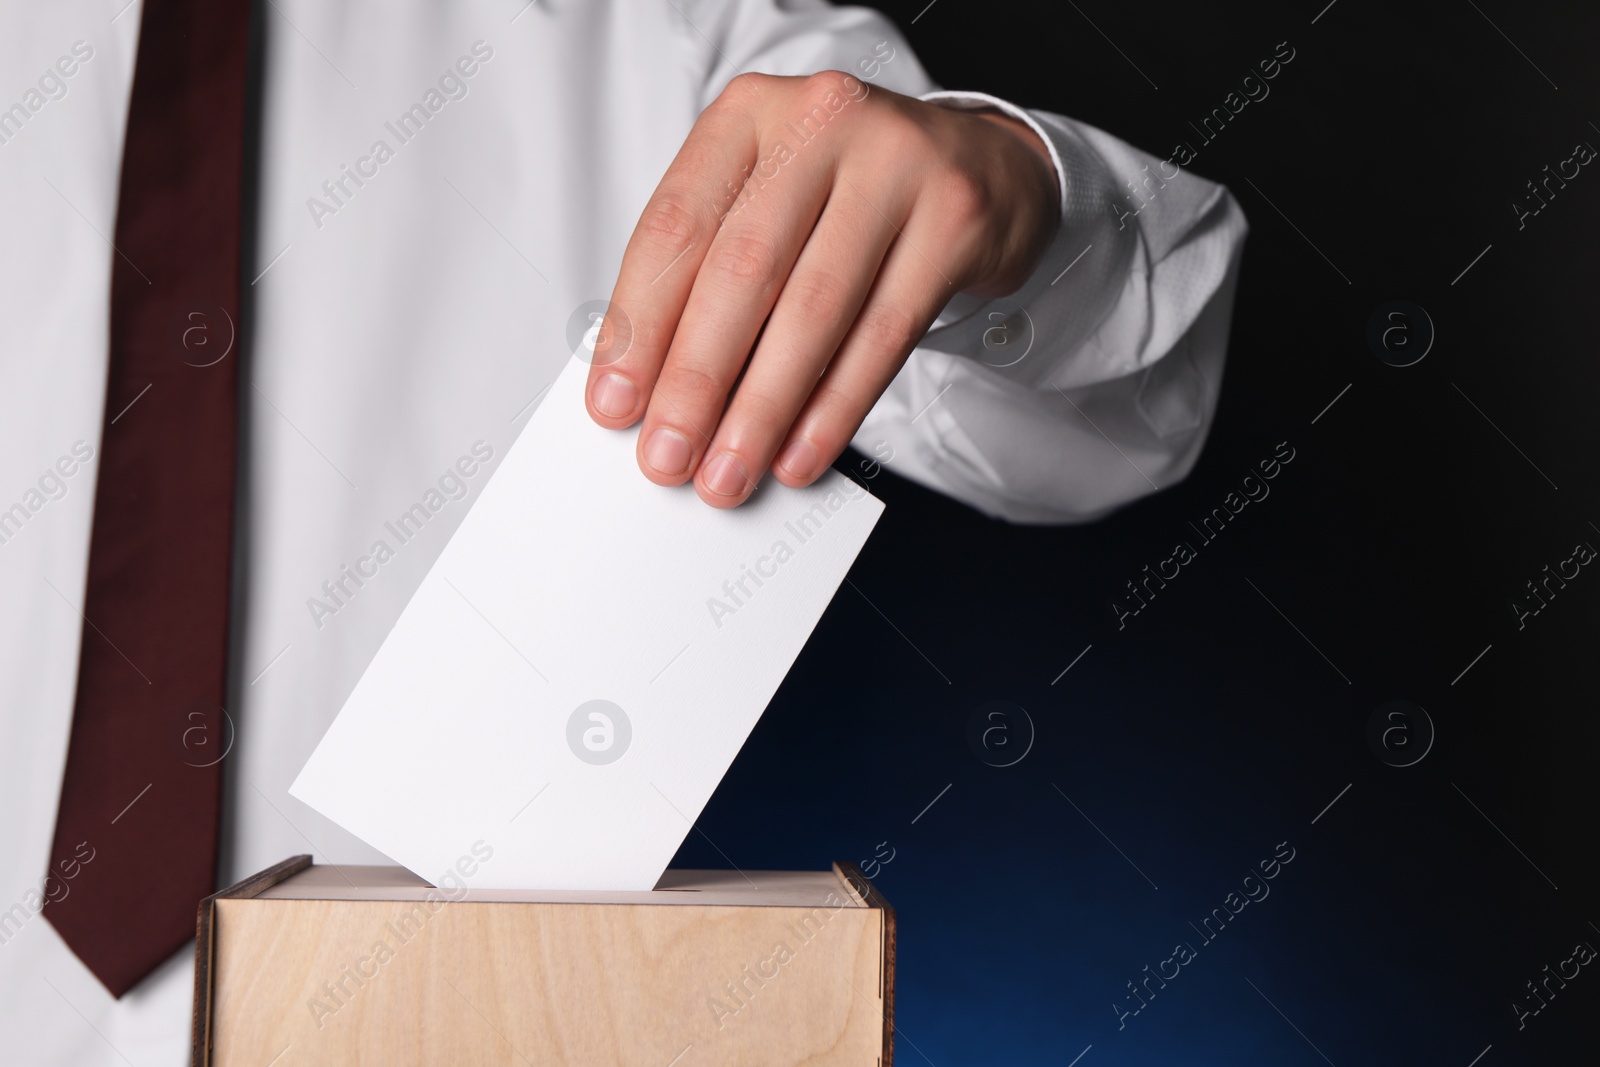 Photo of Man putting his vote into ballot box on dark blue background, closeup